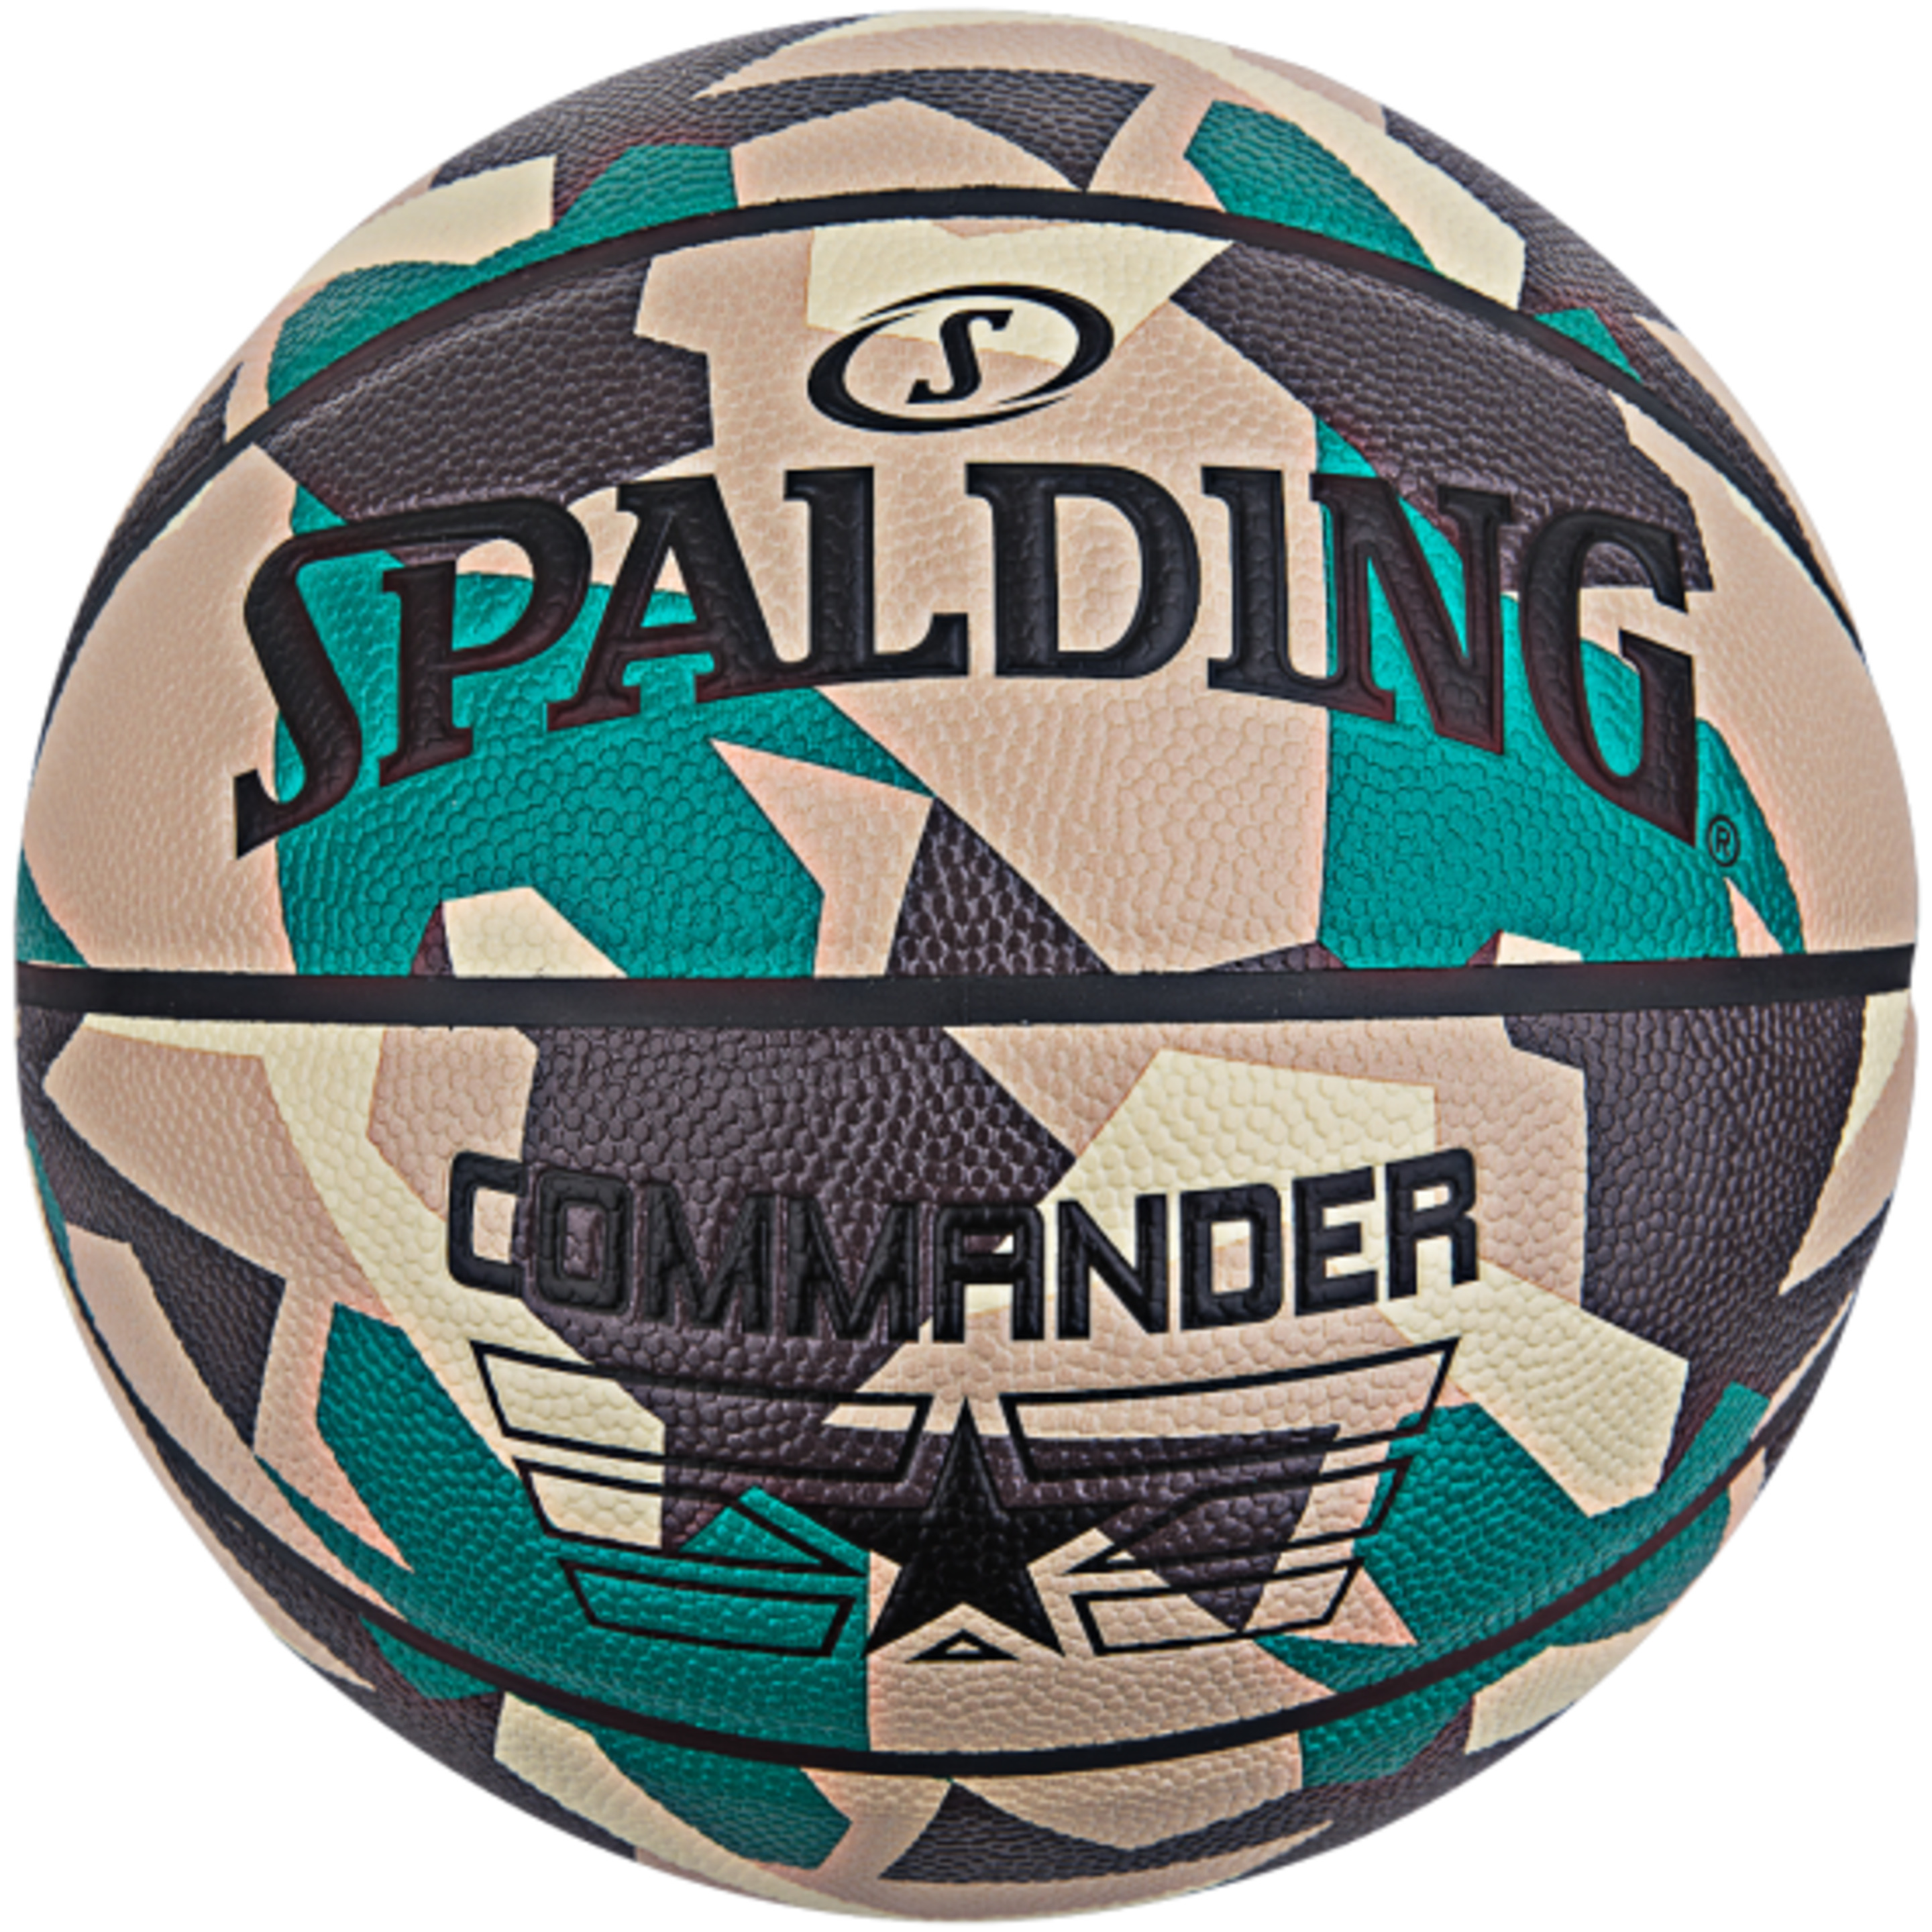 Spalding Commander Poly Sz7 Basquetebol